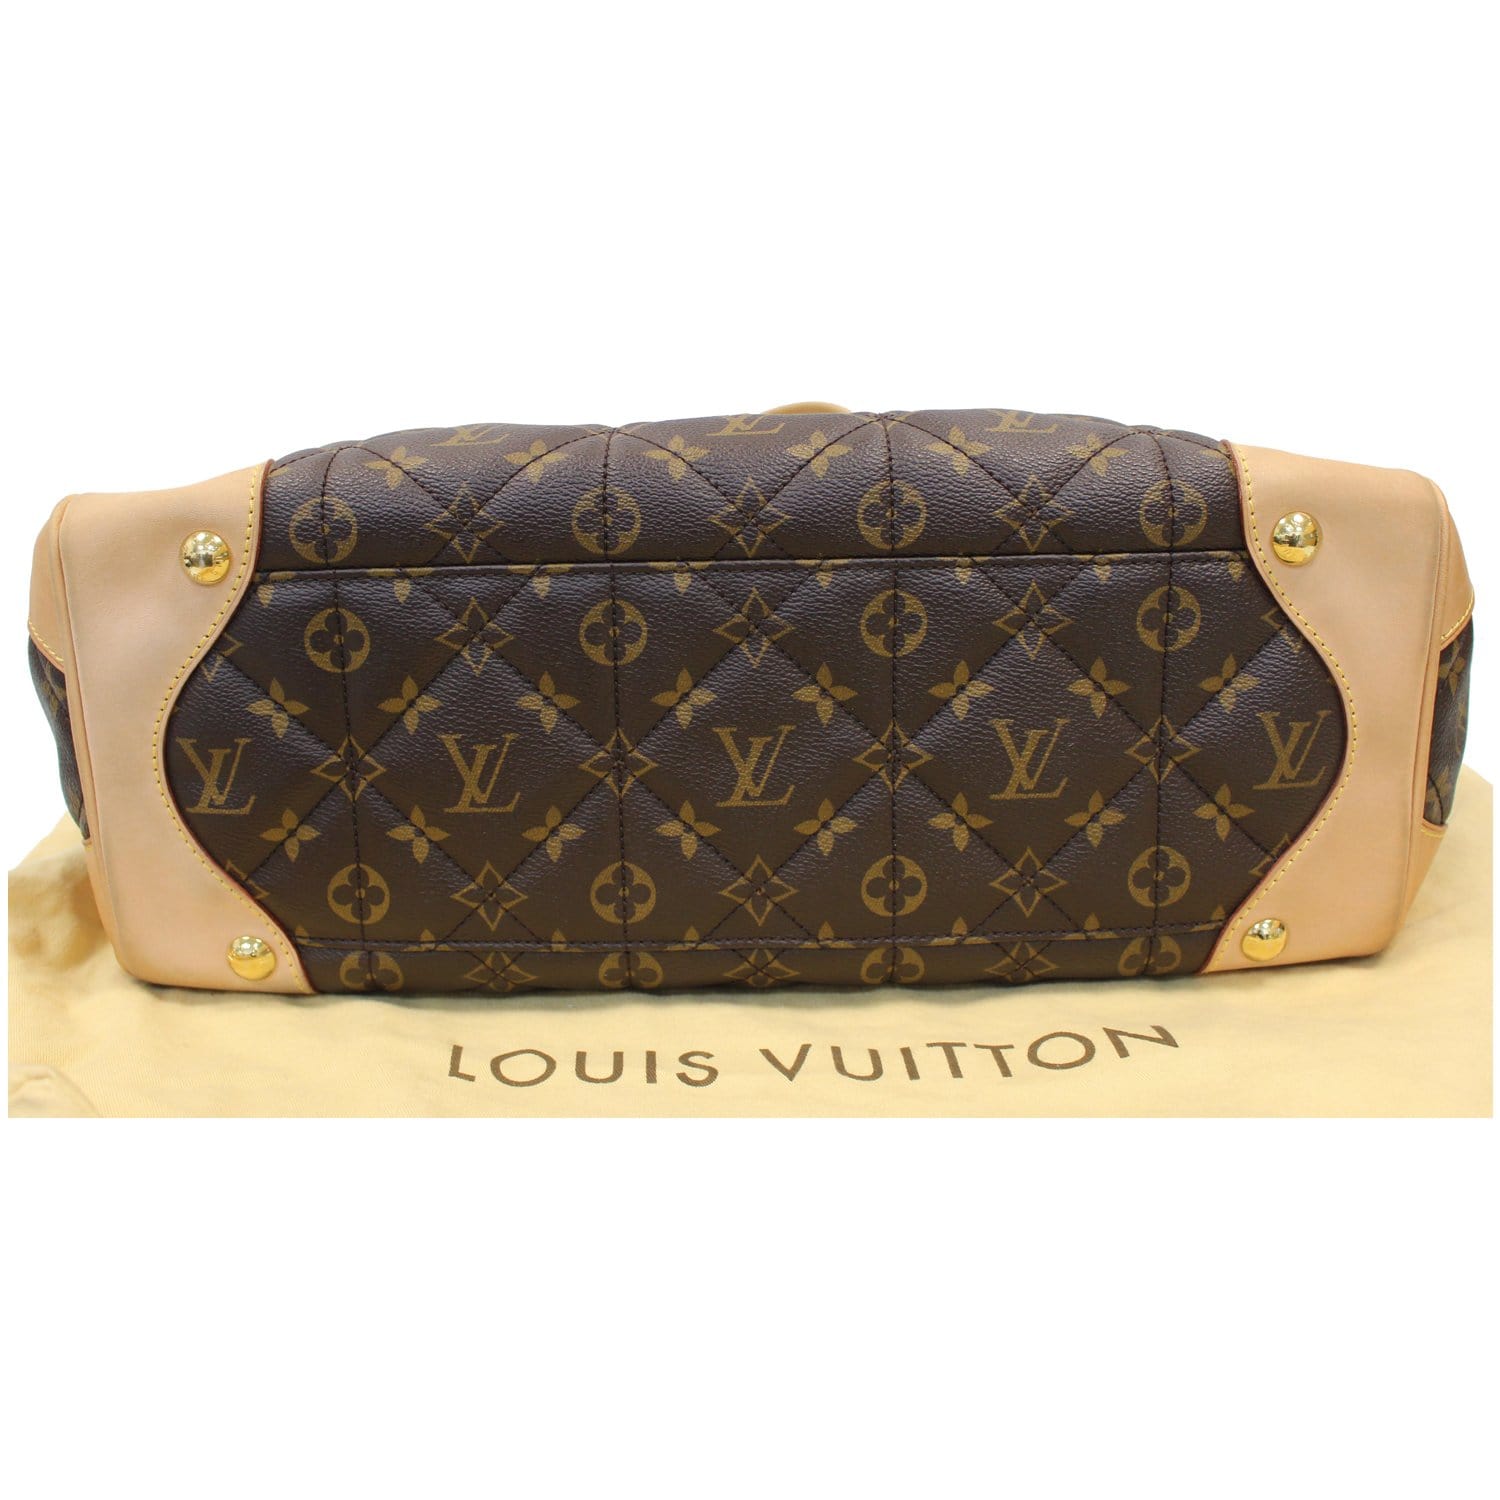 Personal Shopper 🇬🇧 on Instagram: “New Louis Vuitton”